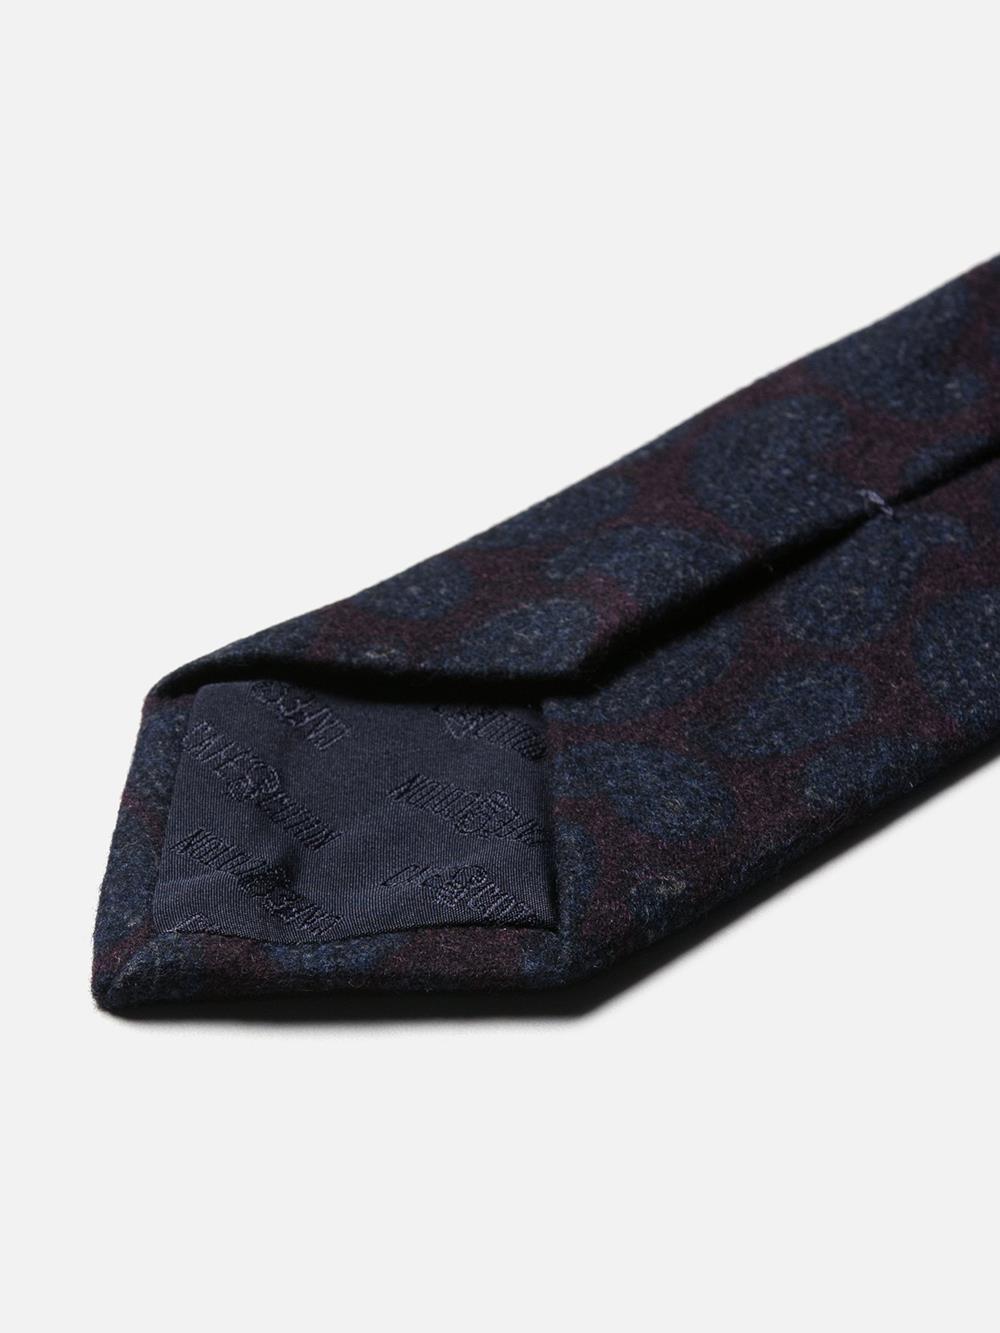 Krawatte aus Wolle und Seide in pflaume mit Paisley-Muster